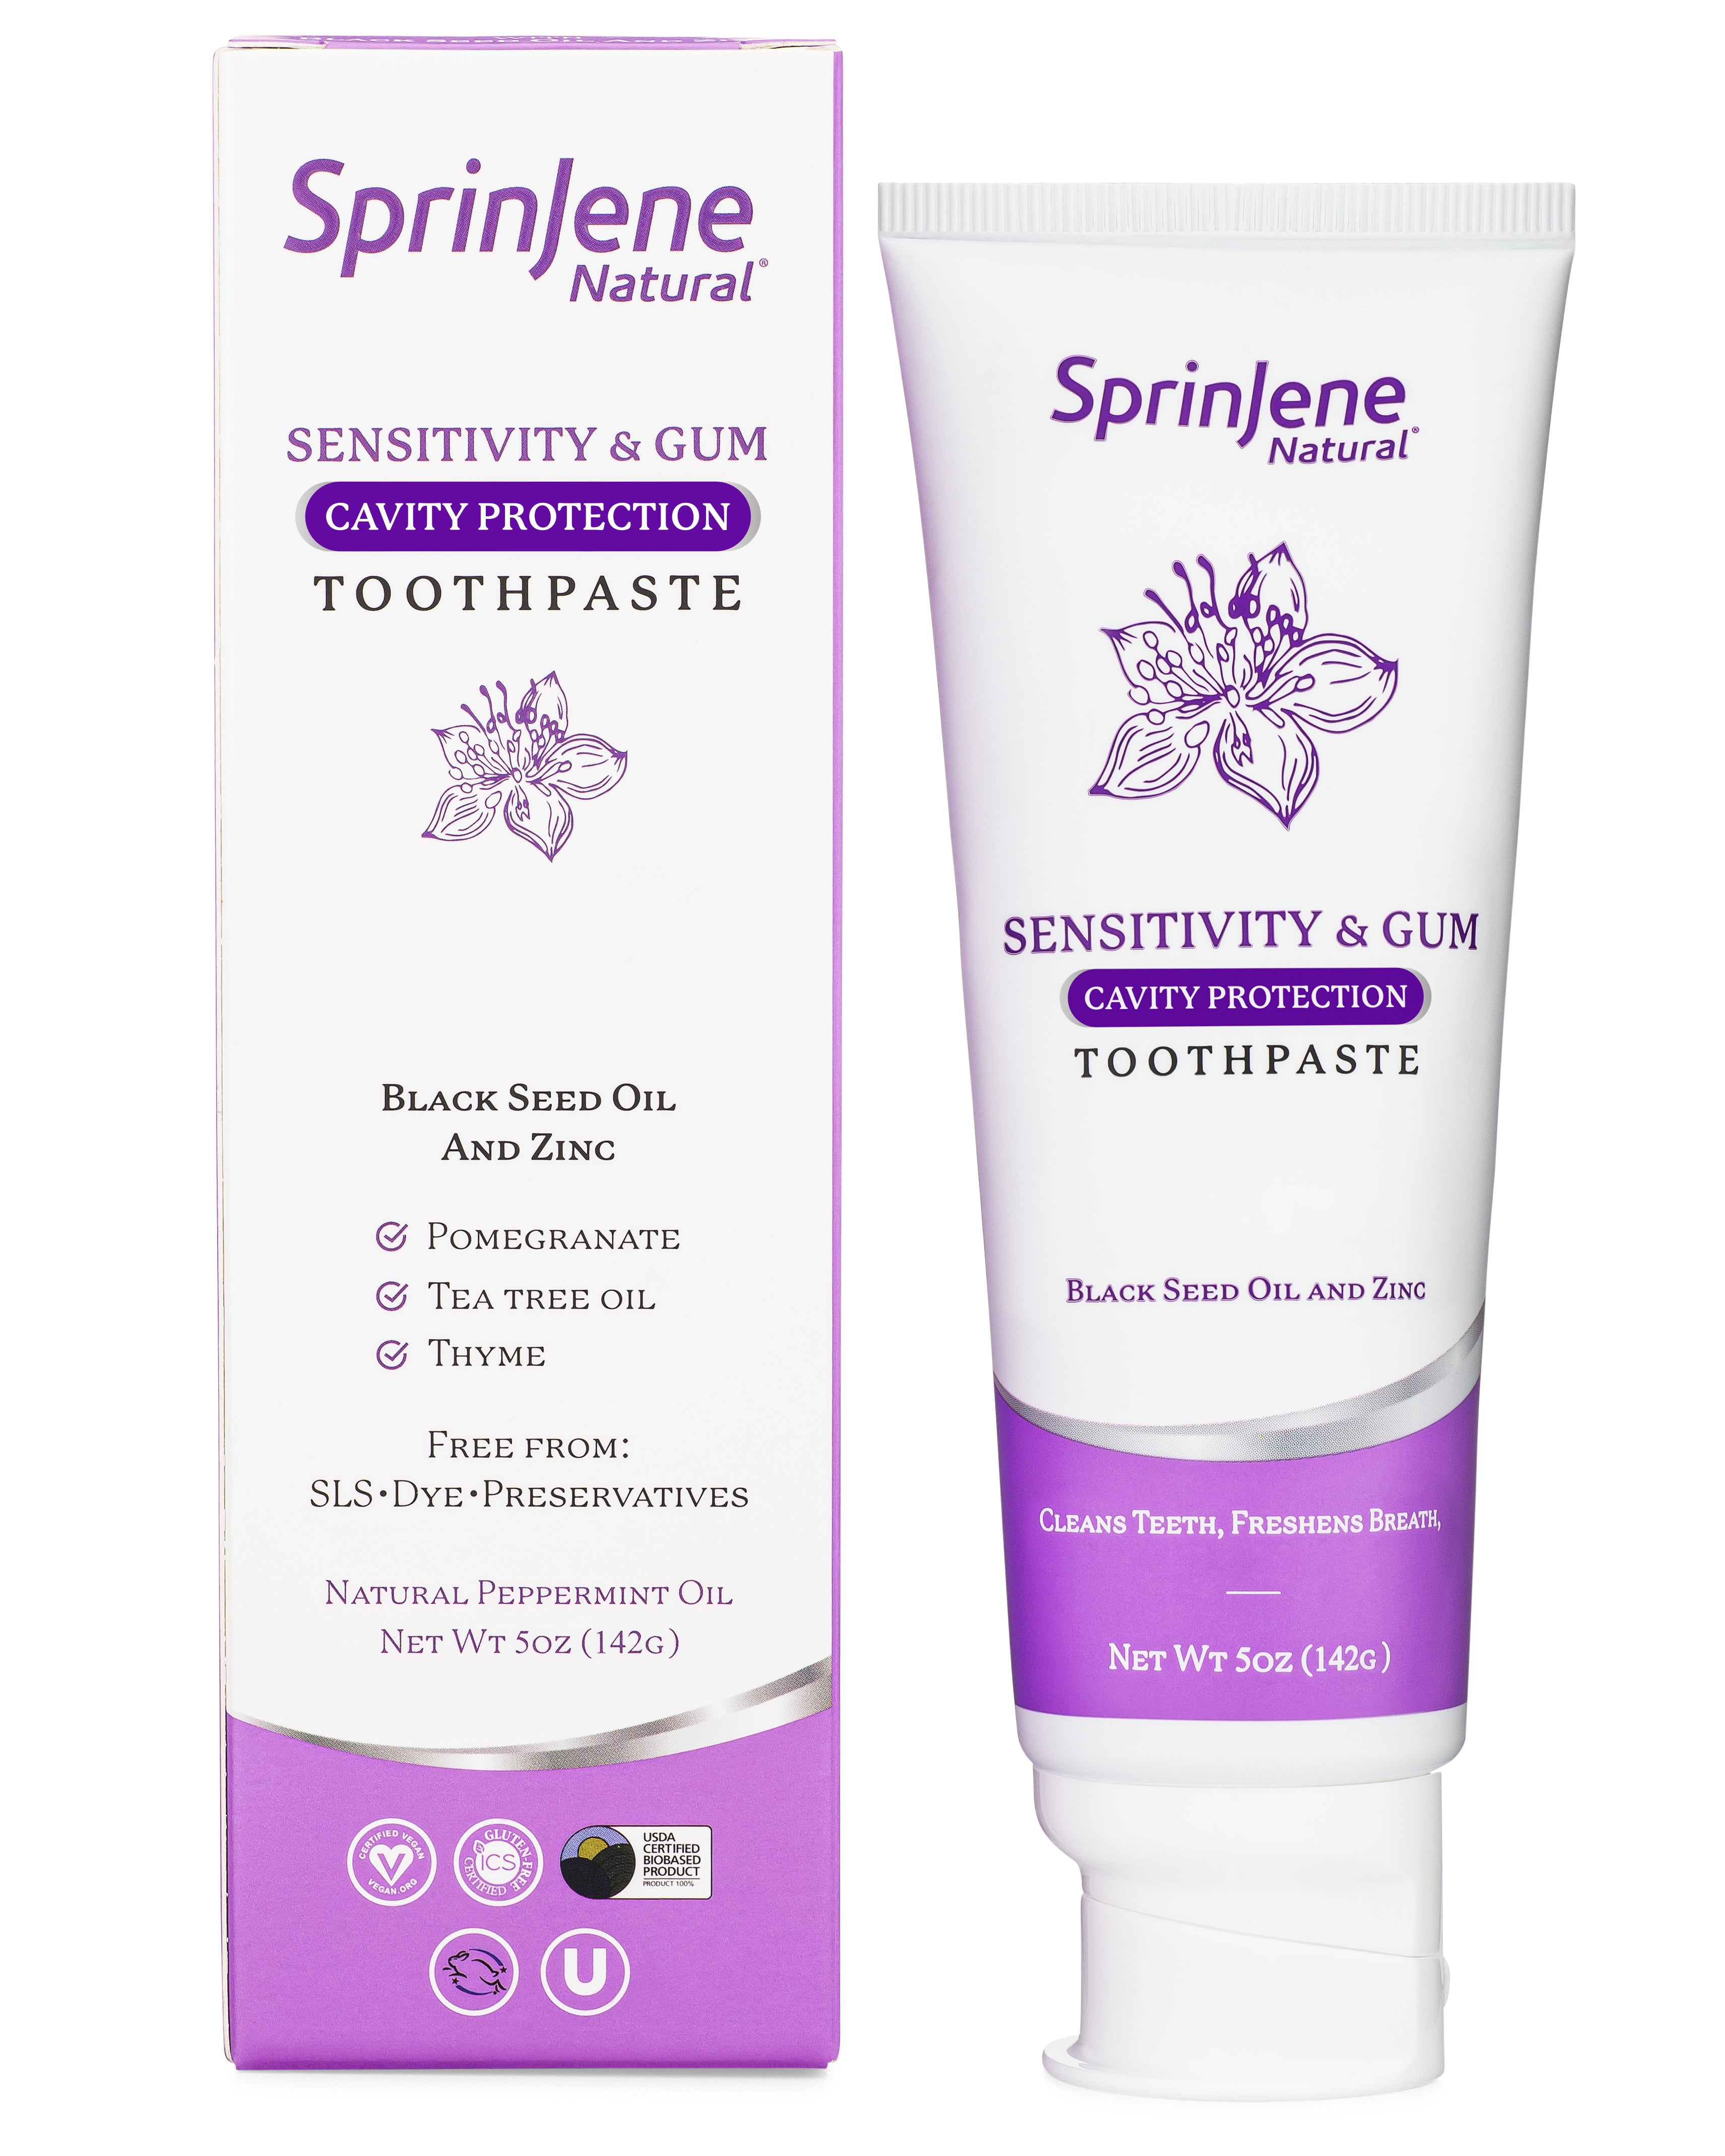 Sensitivity & Gum Cavity Protection by SprinJene Natural® 5oz - 1 unit